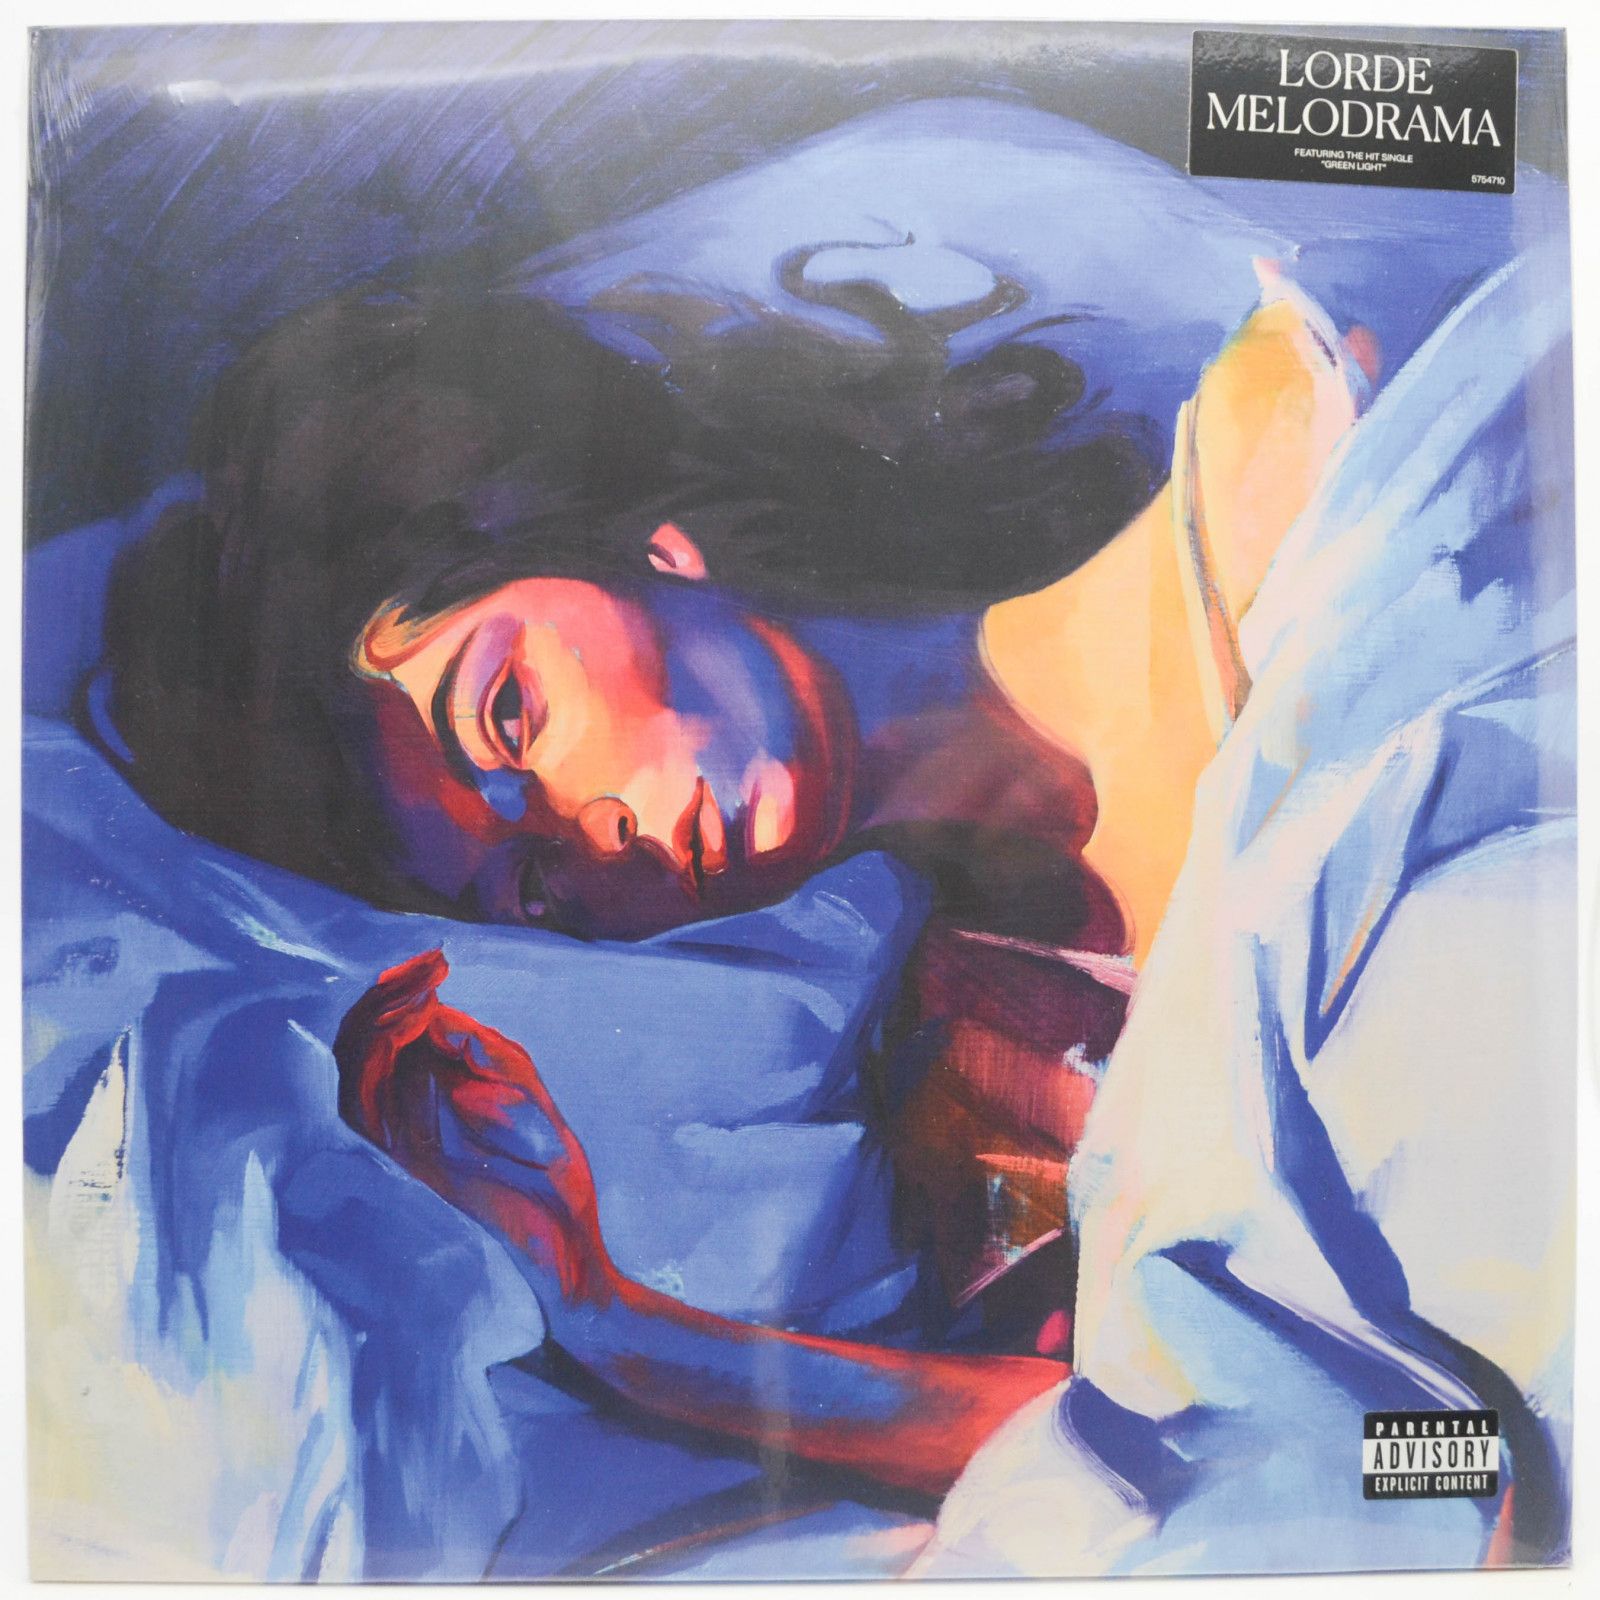 Lorde — Melodrama, 2017